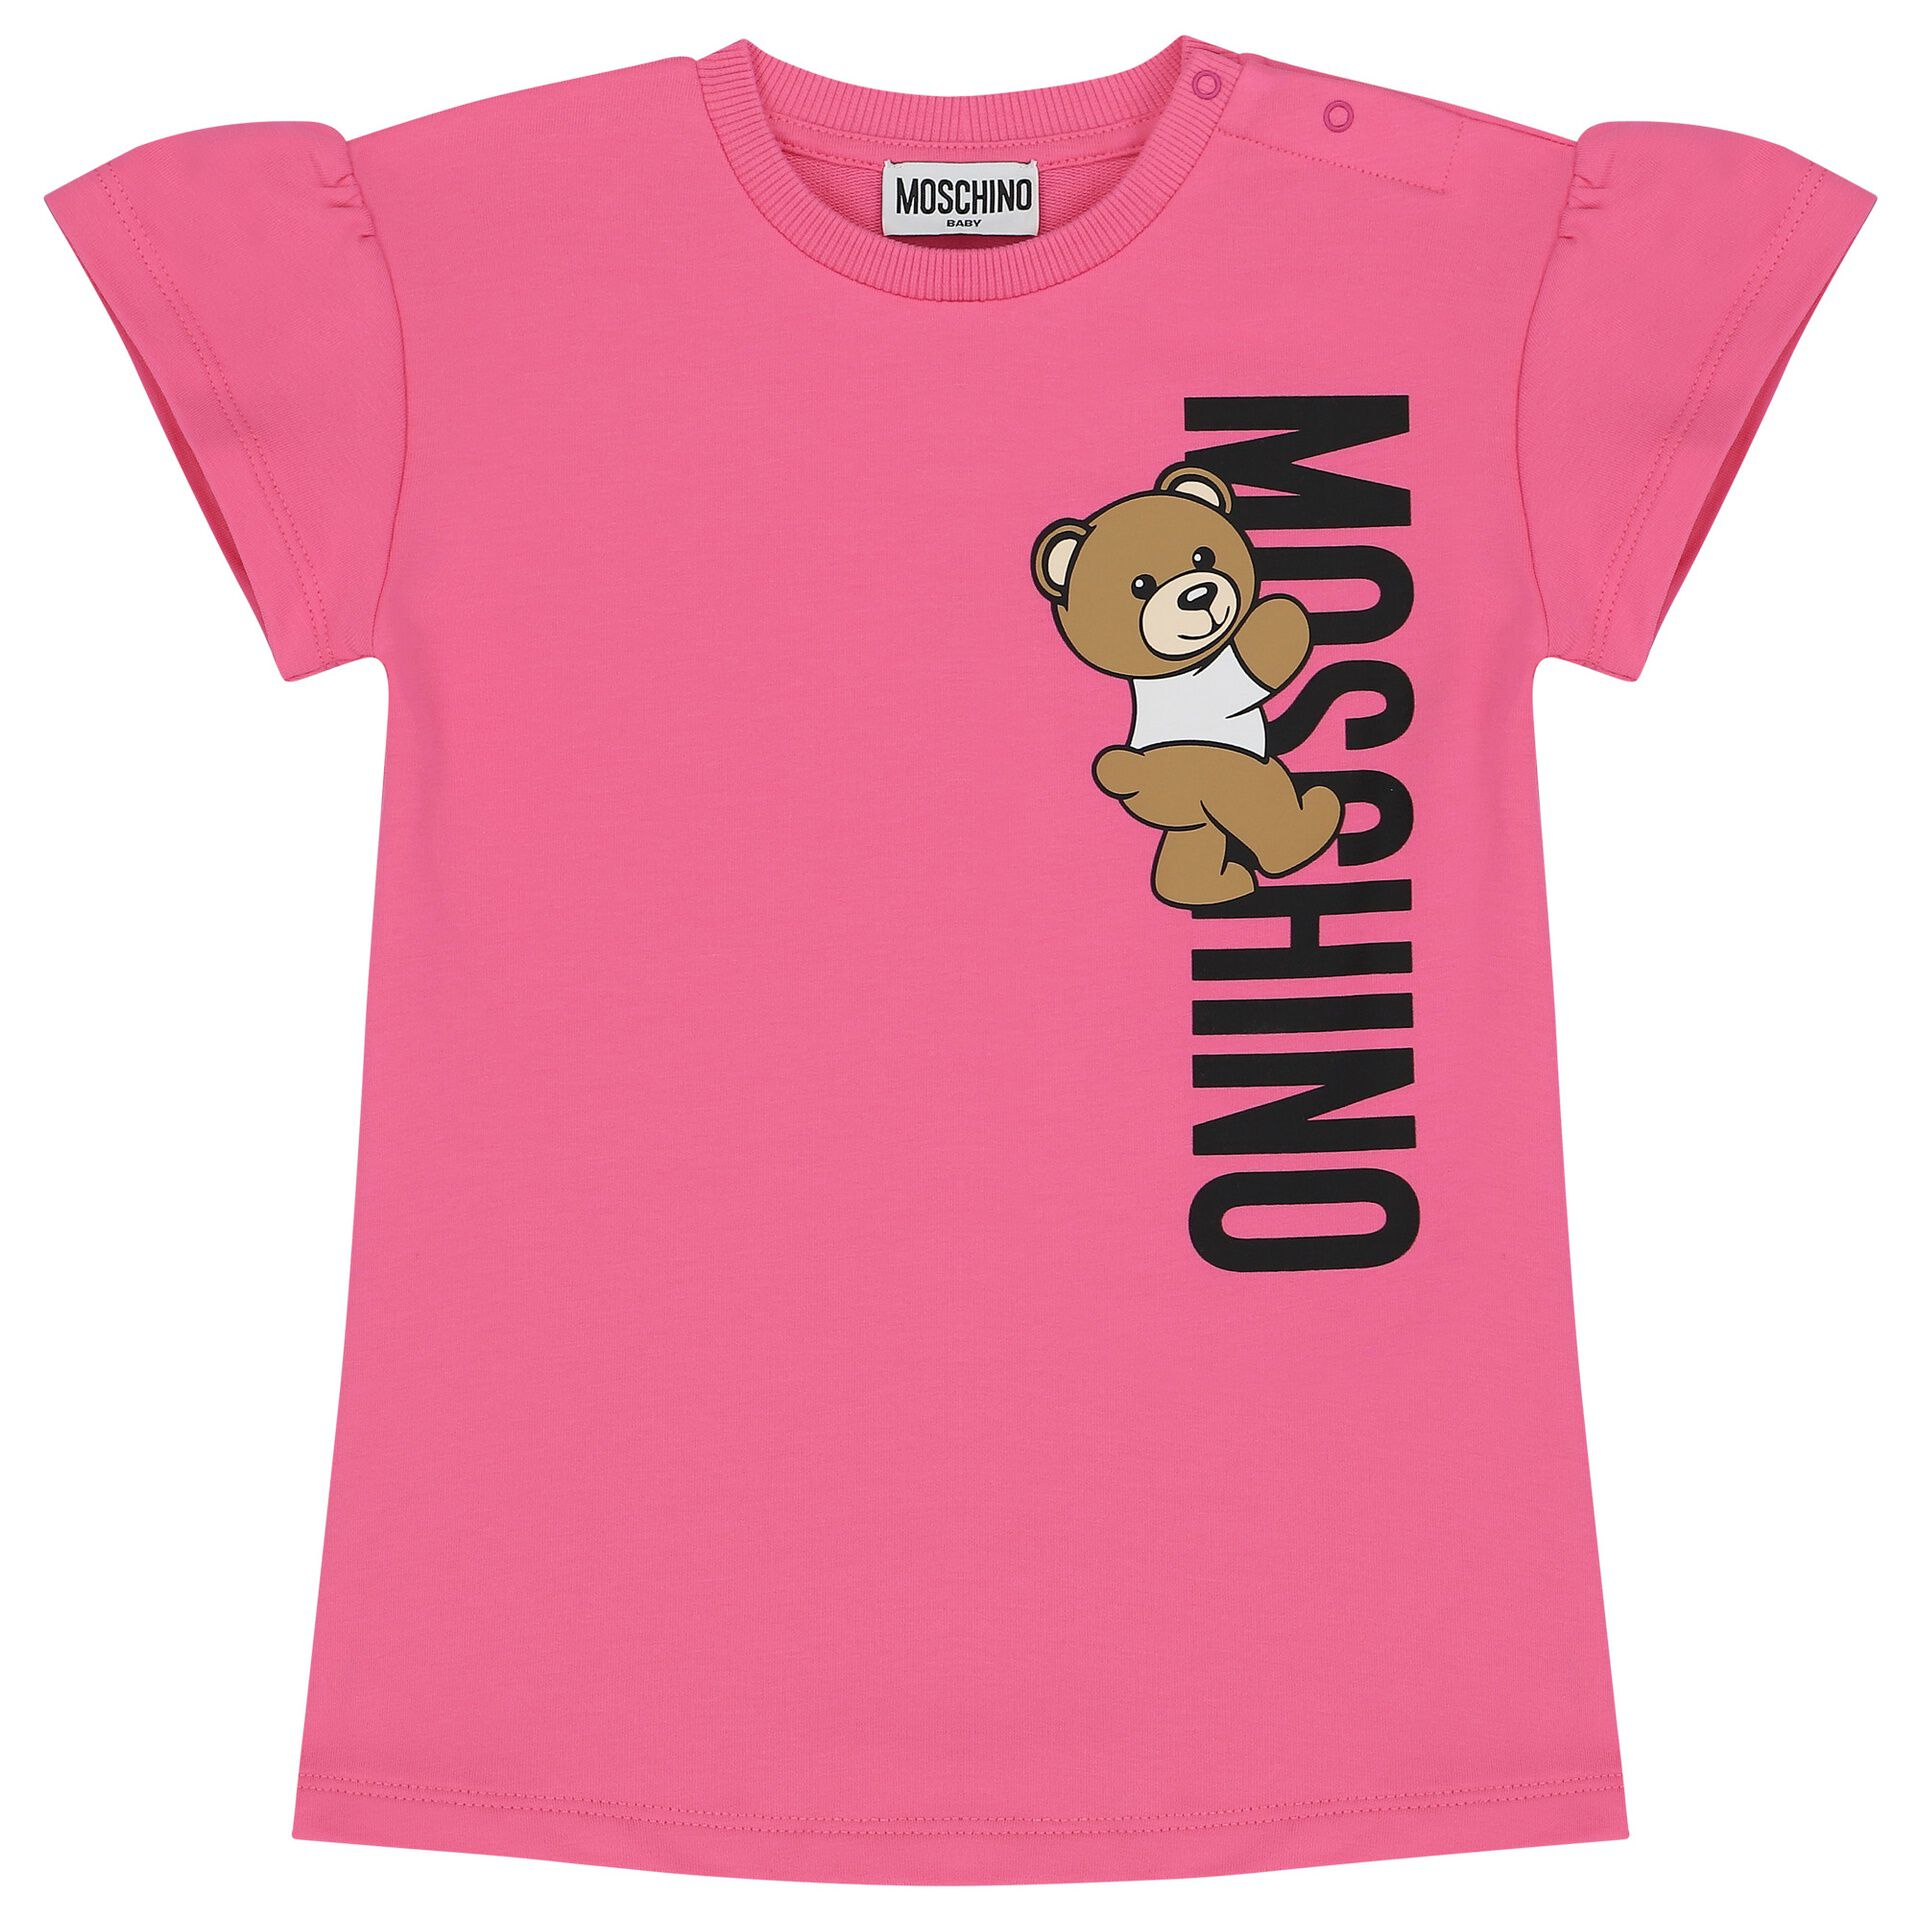 Moschino Kids logo-print cap - Pink